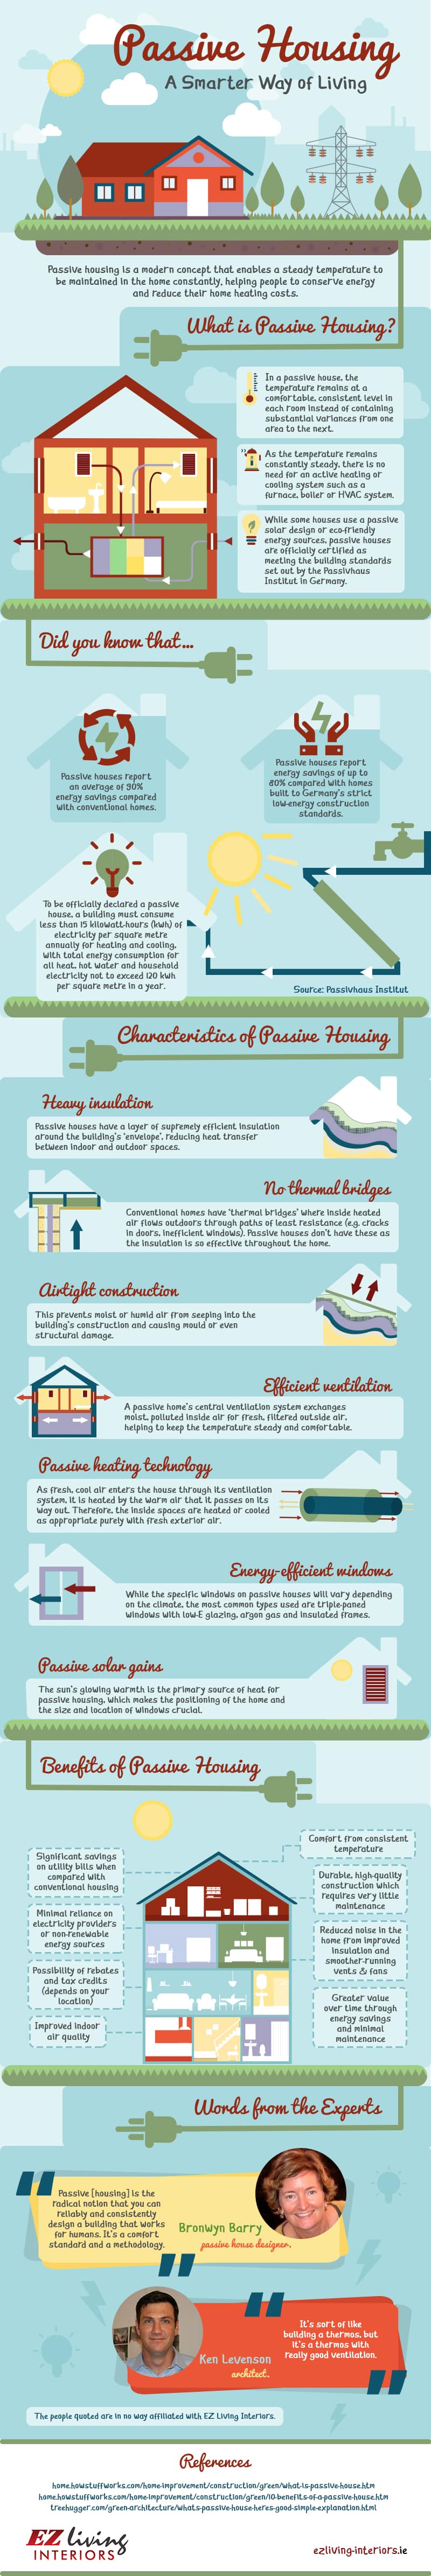 passive-housing-smarter-way-living-infographic